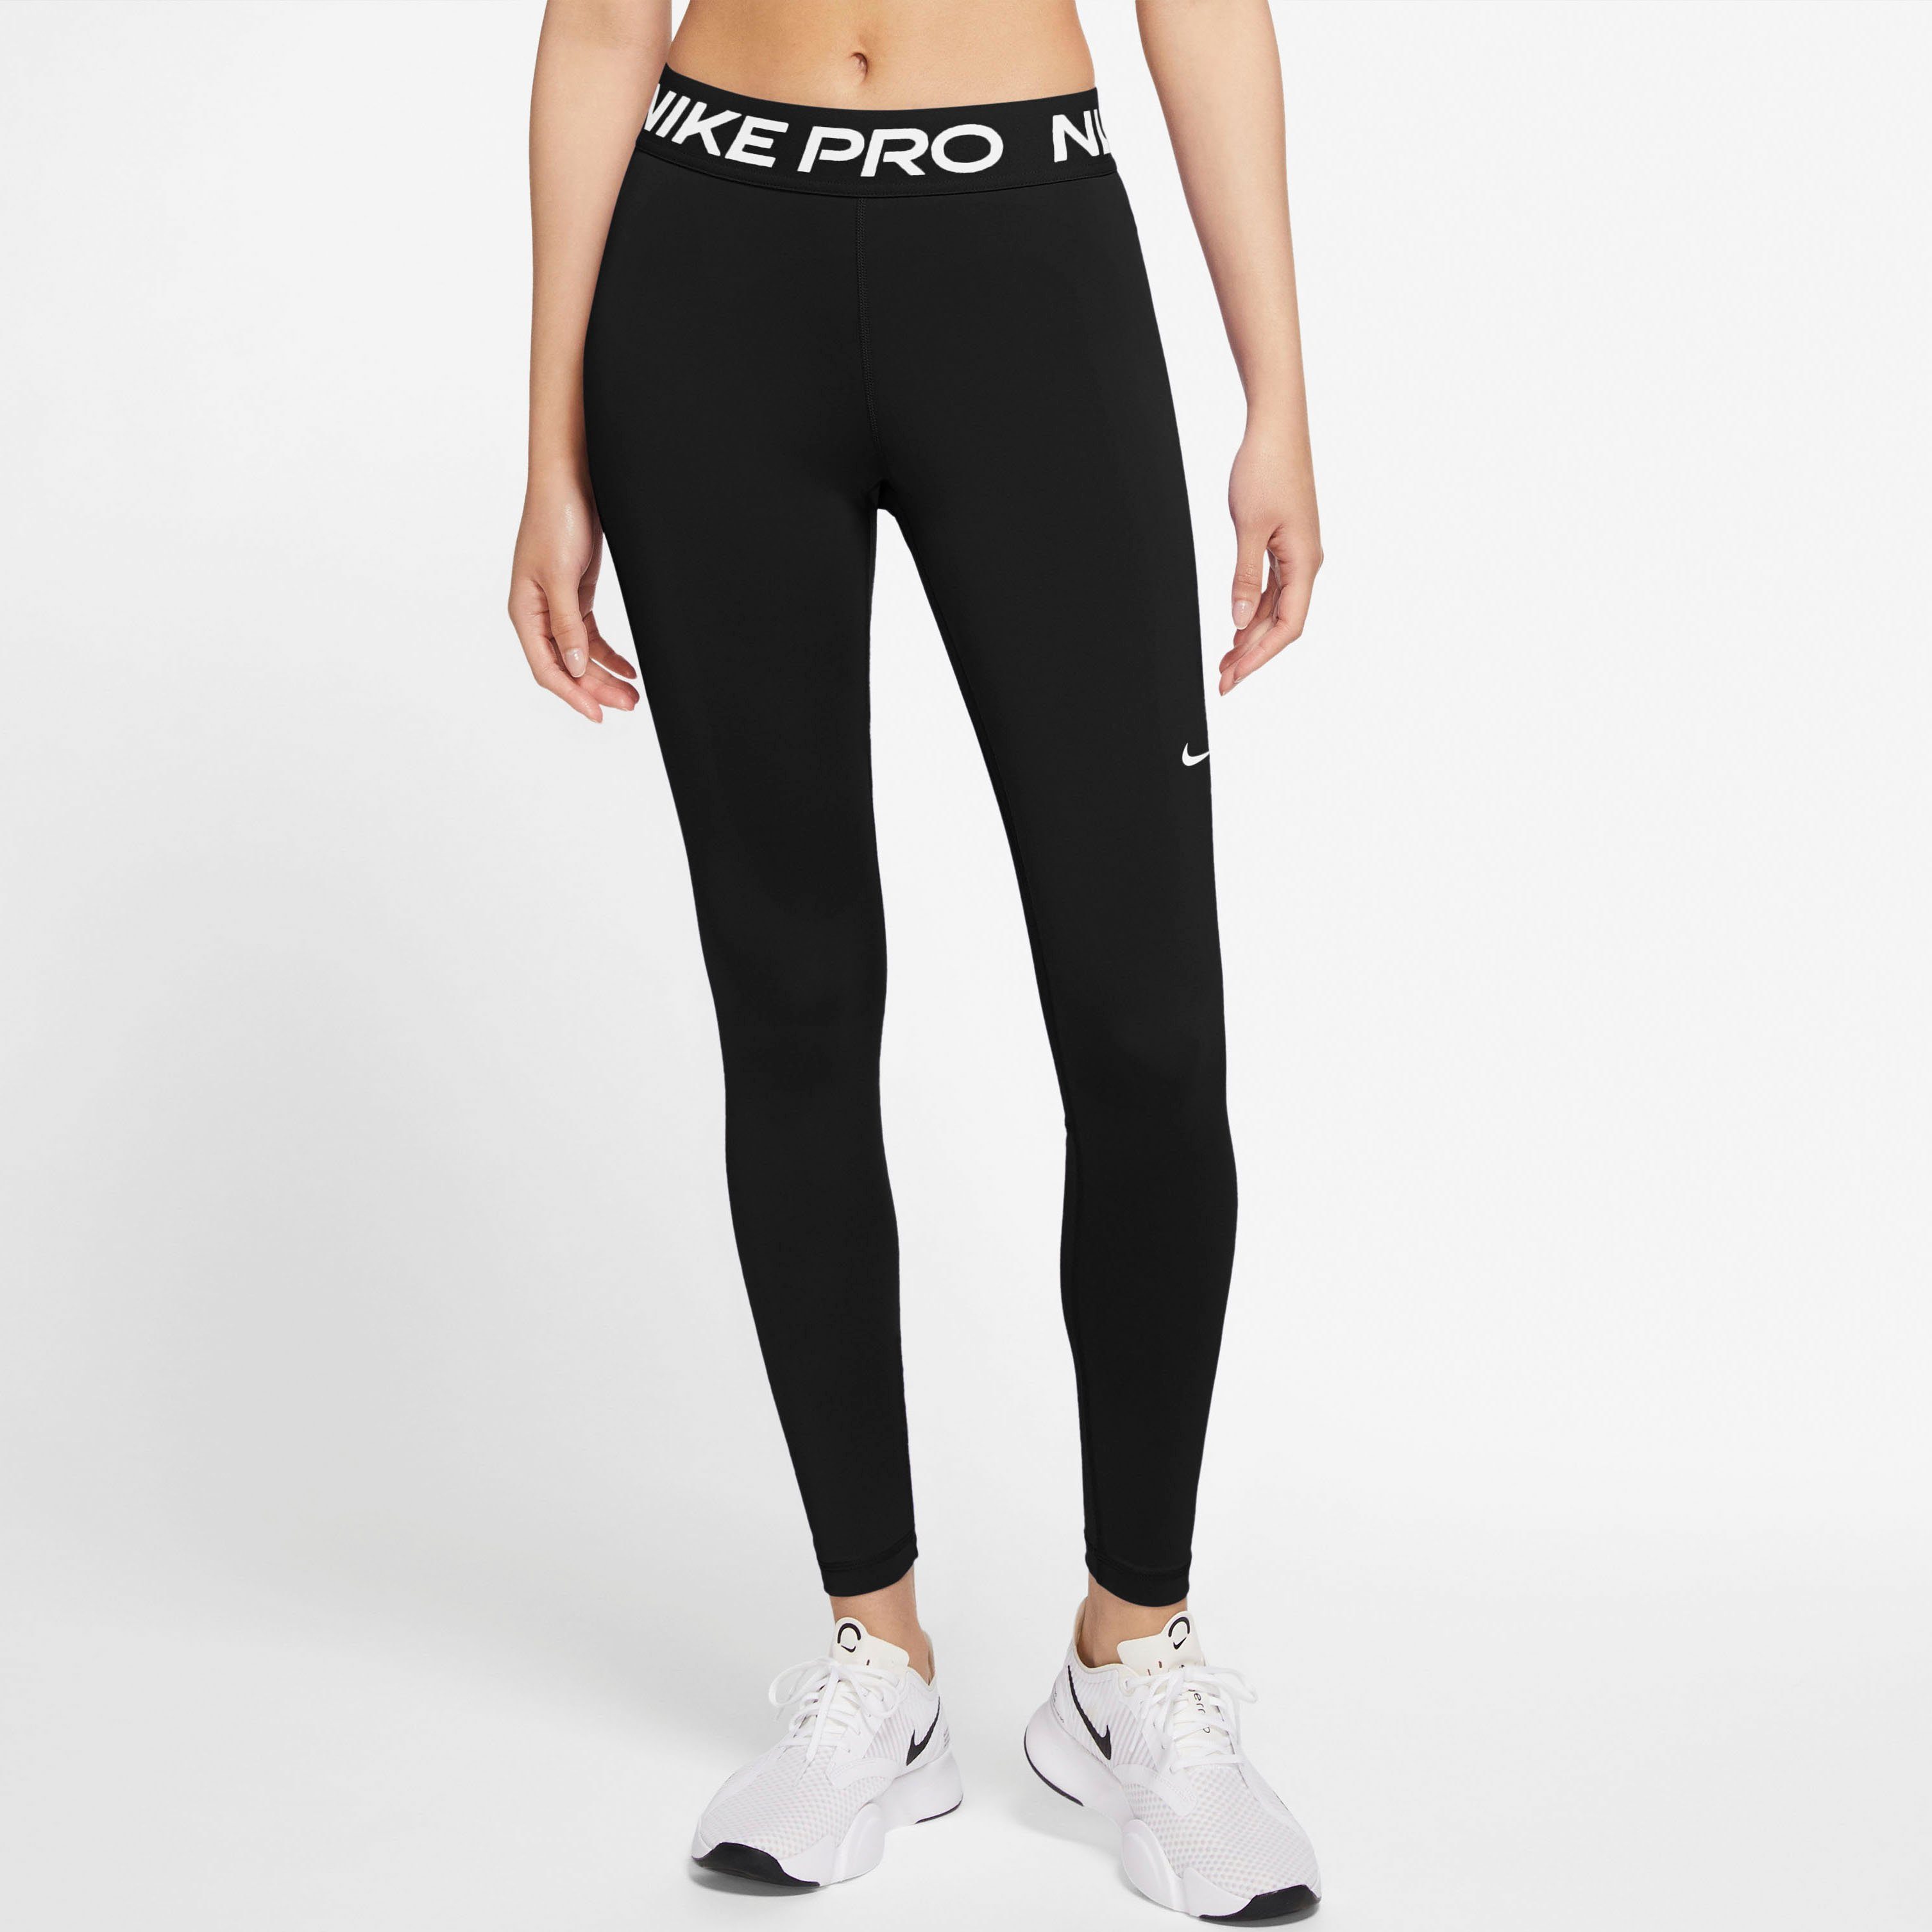 Nike Damen Sporthosen online kaufen | OTTO